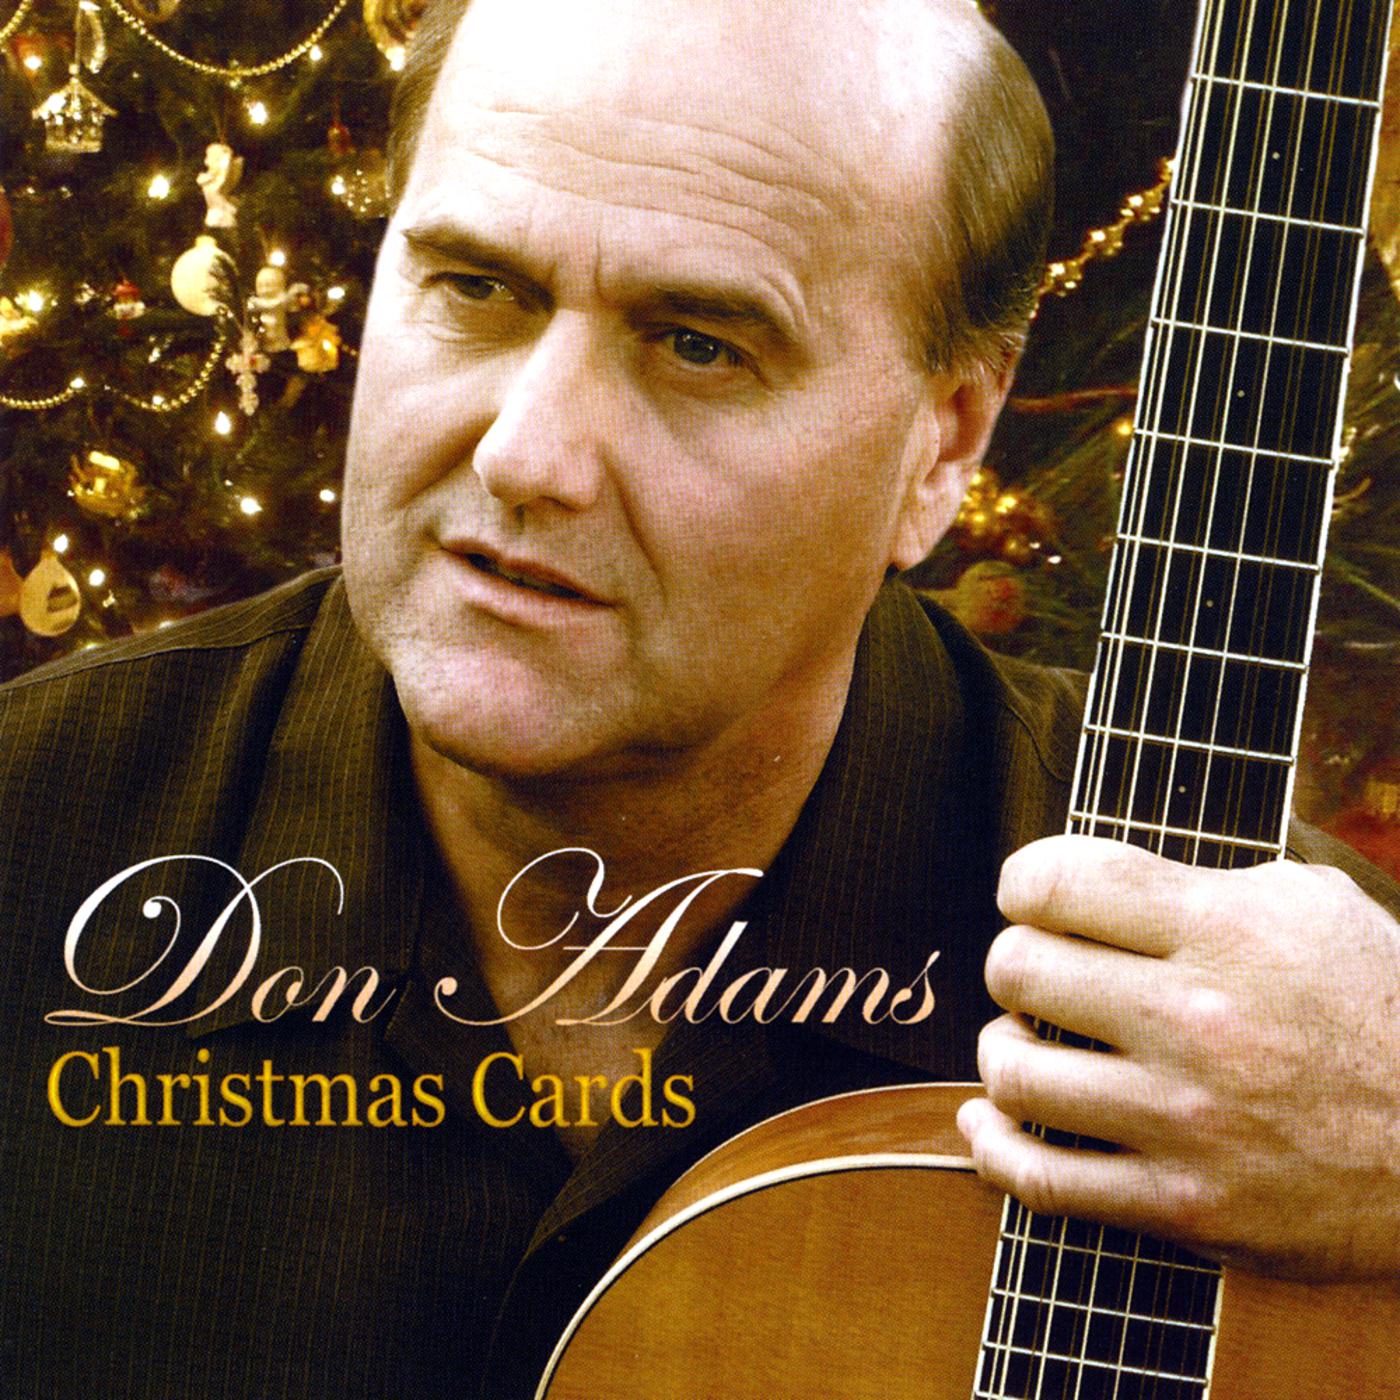 Don Adams - Christmas Is the Saddest Time